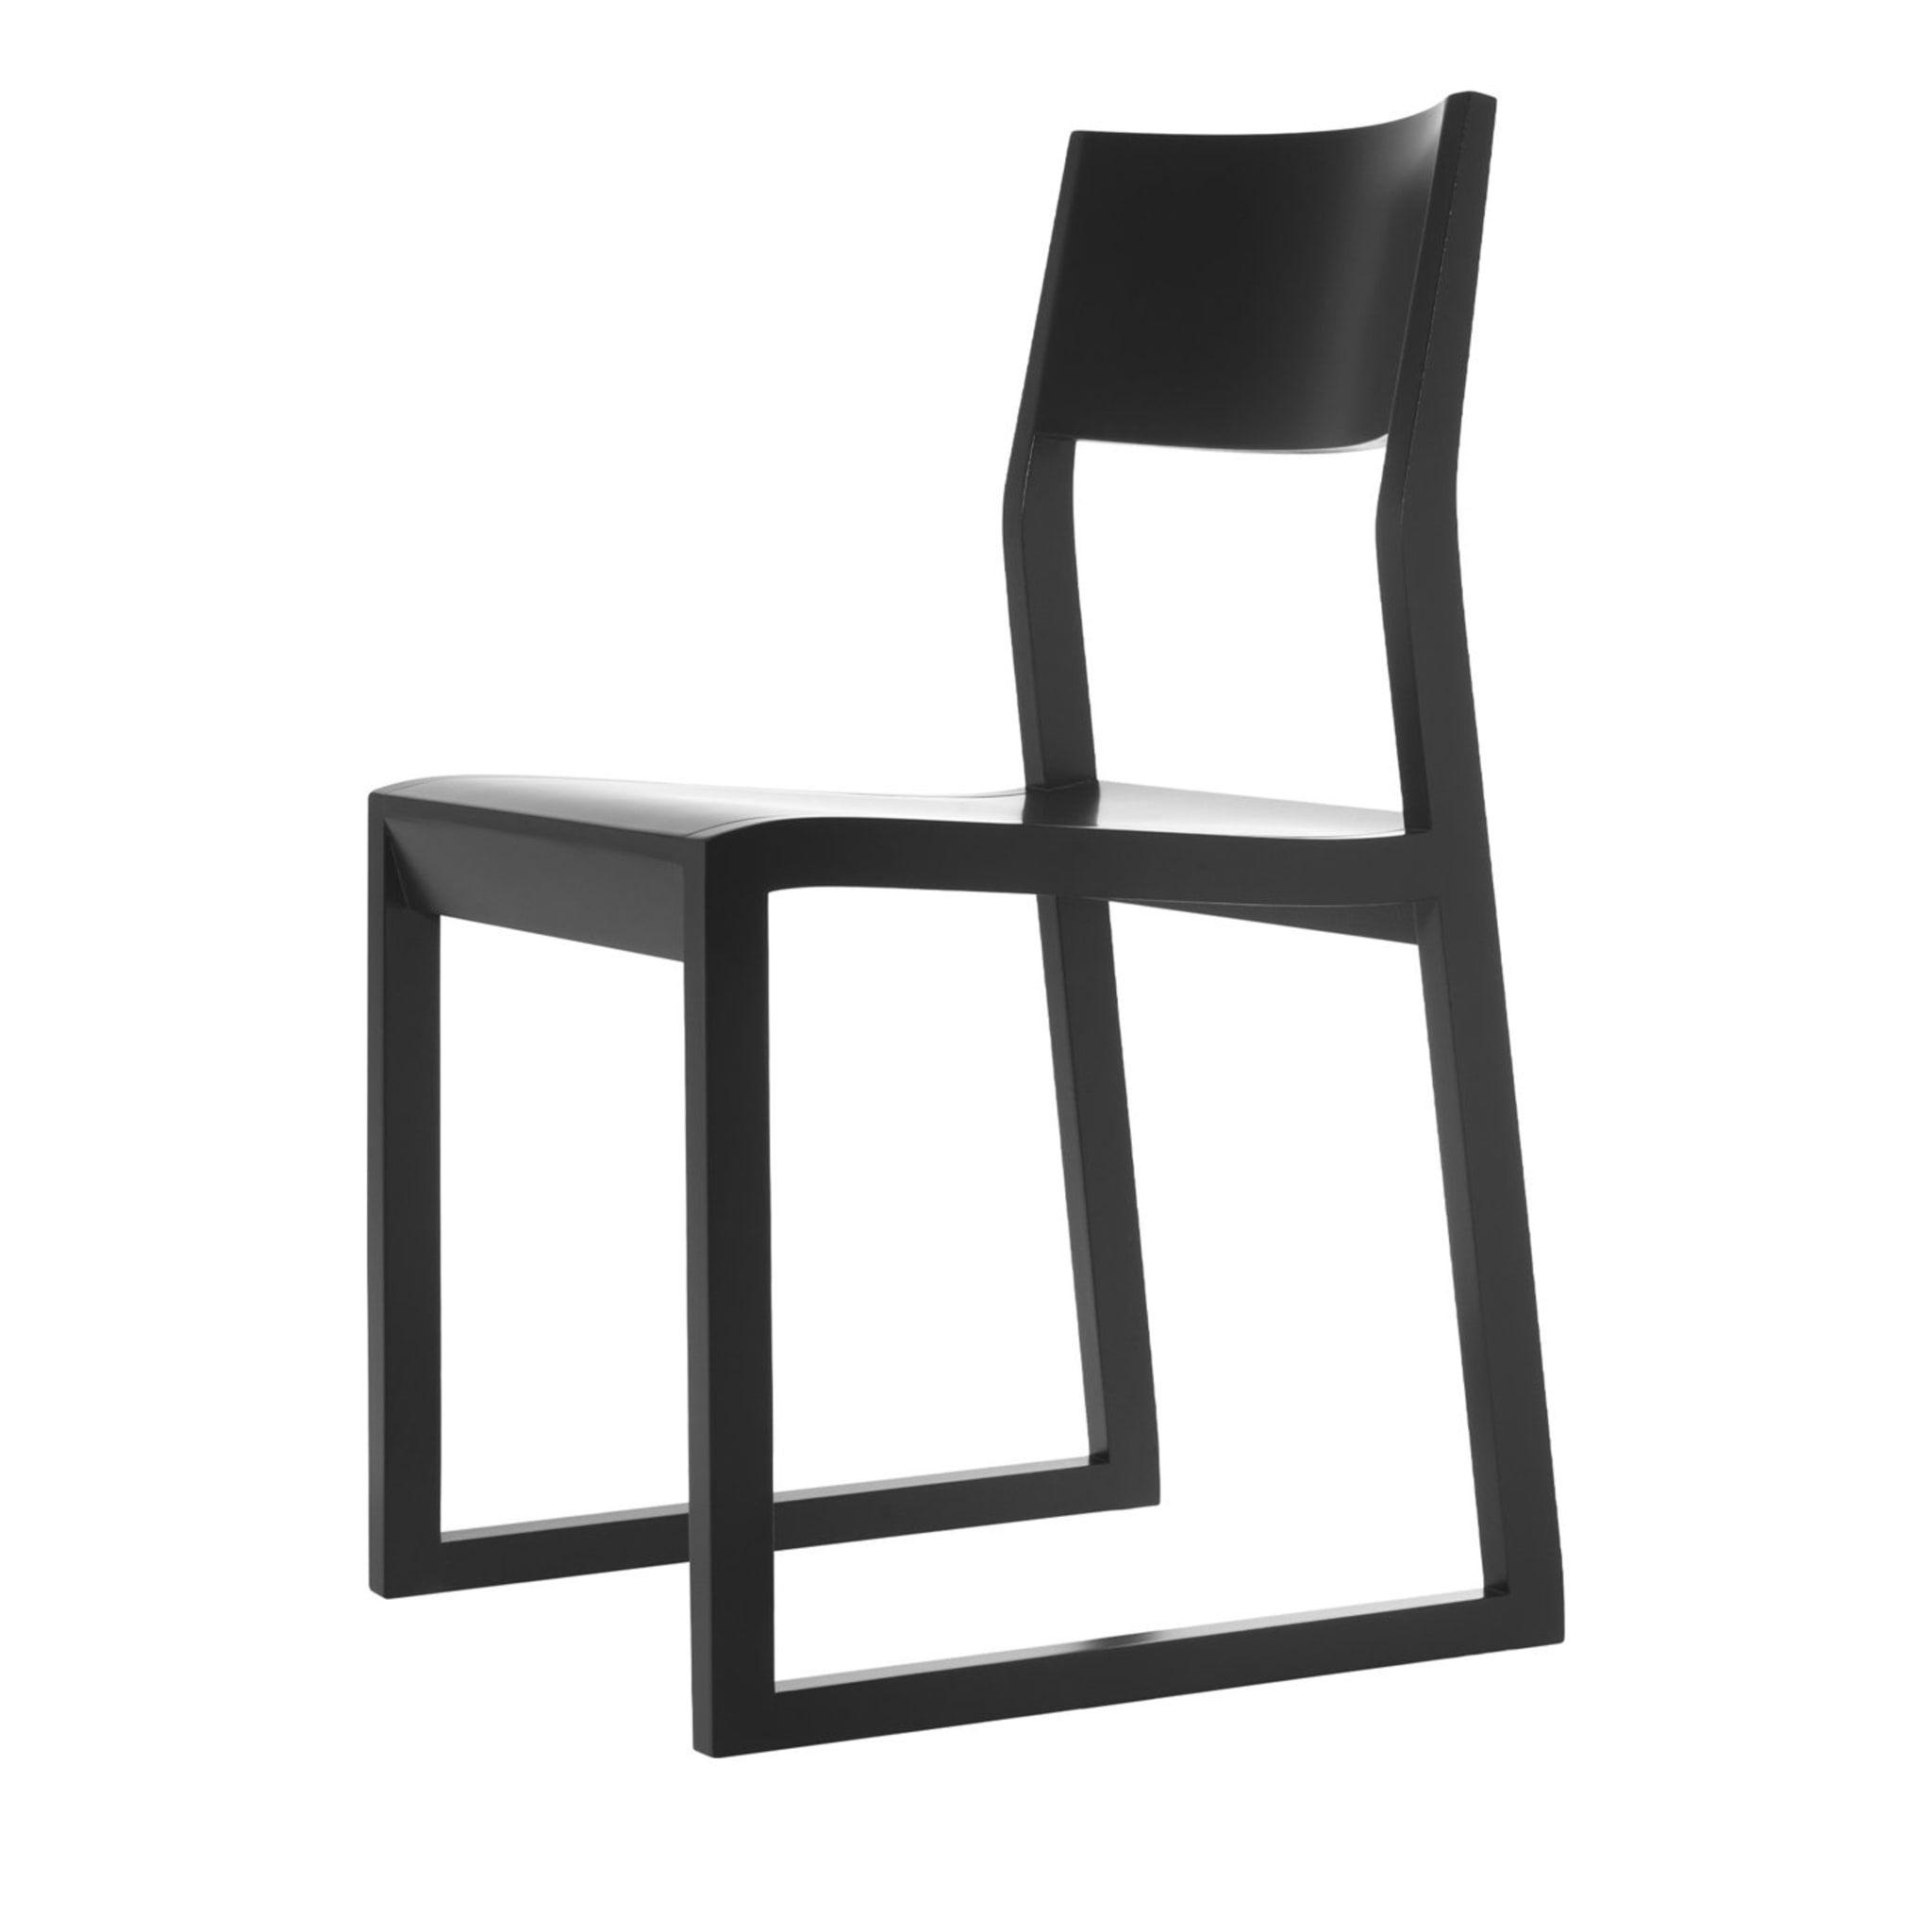 Set of 2 Black Sciza Chairs by Takashi Kirimoto - Main view